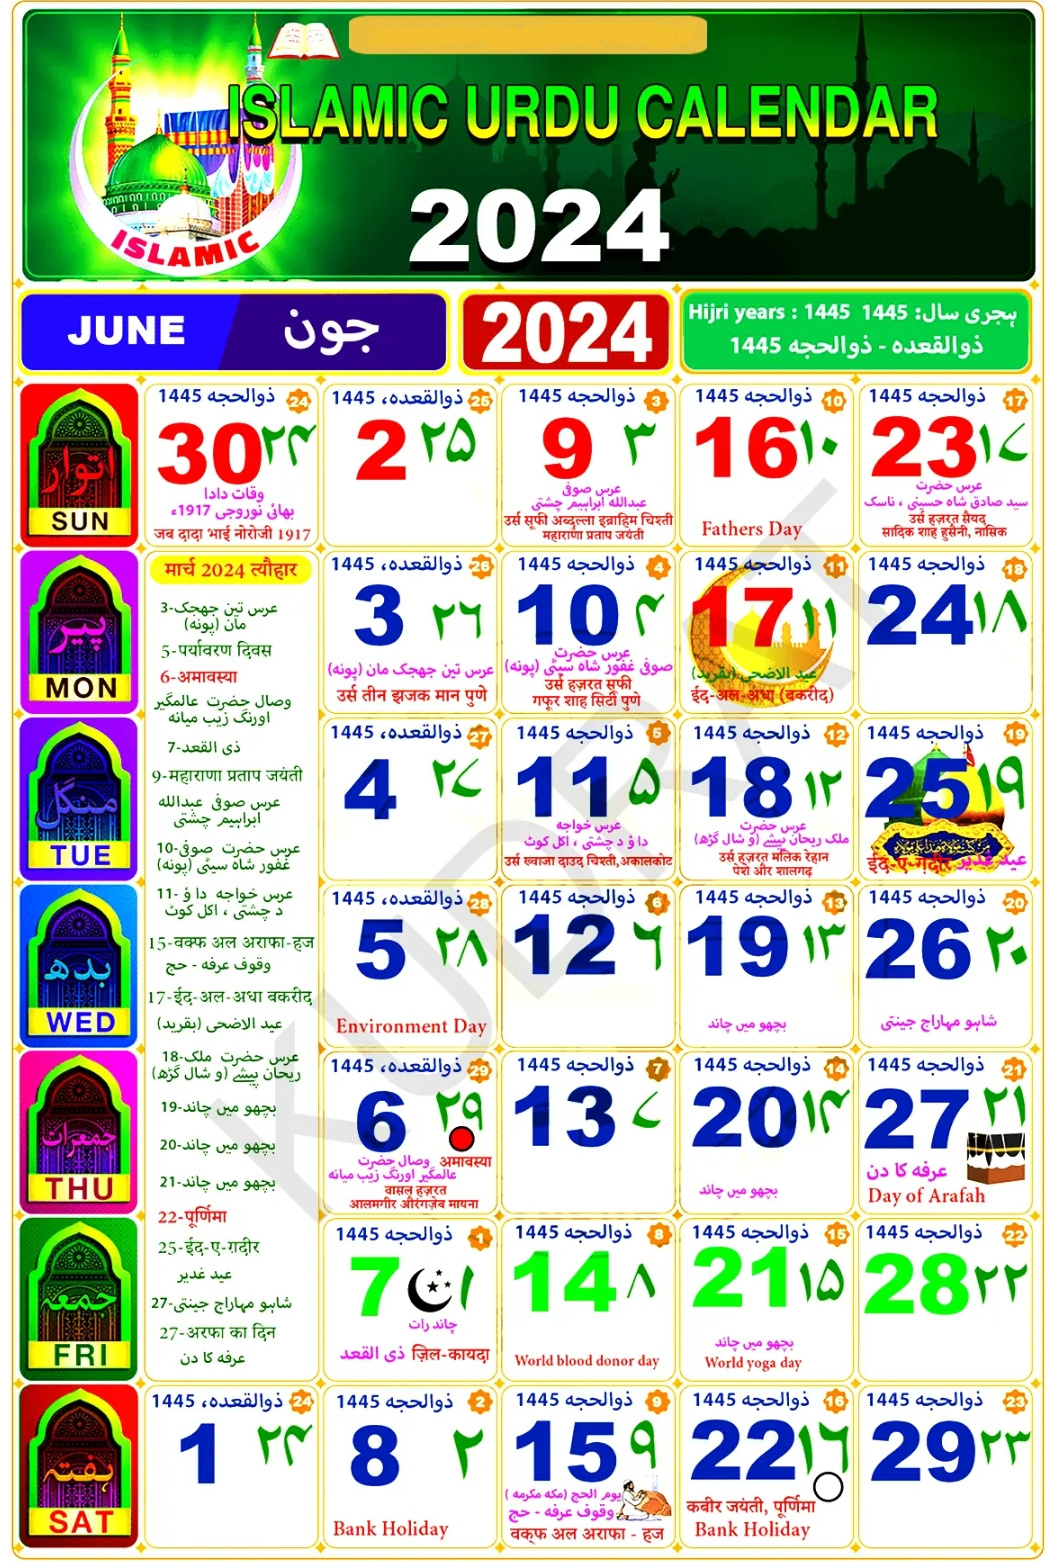 Islamic Calendar 2024 June All Special Day And Hijri Month Details pertaining to June 2024 Urdu Calendar